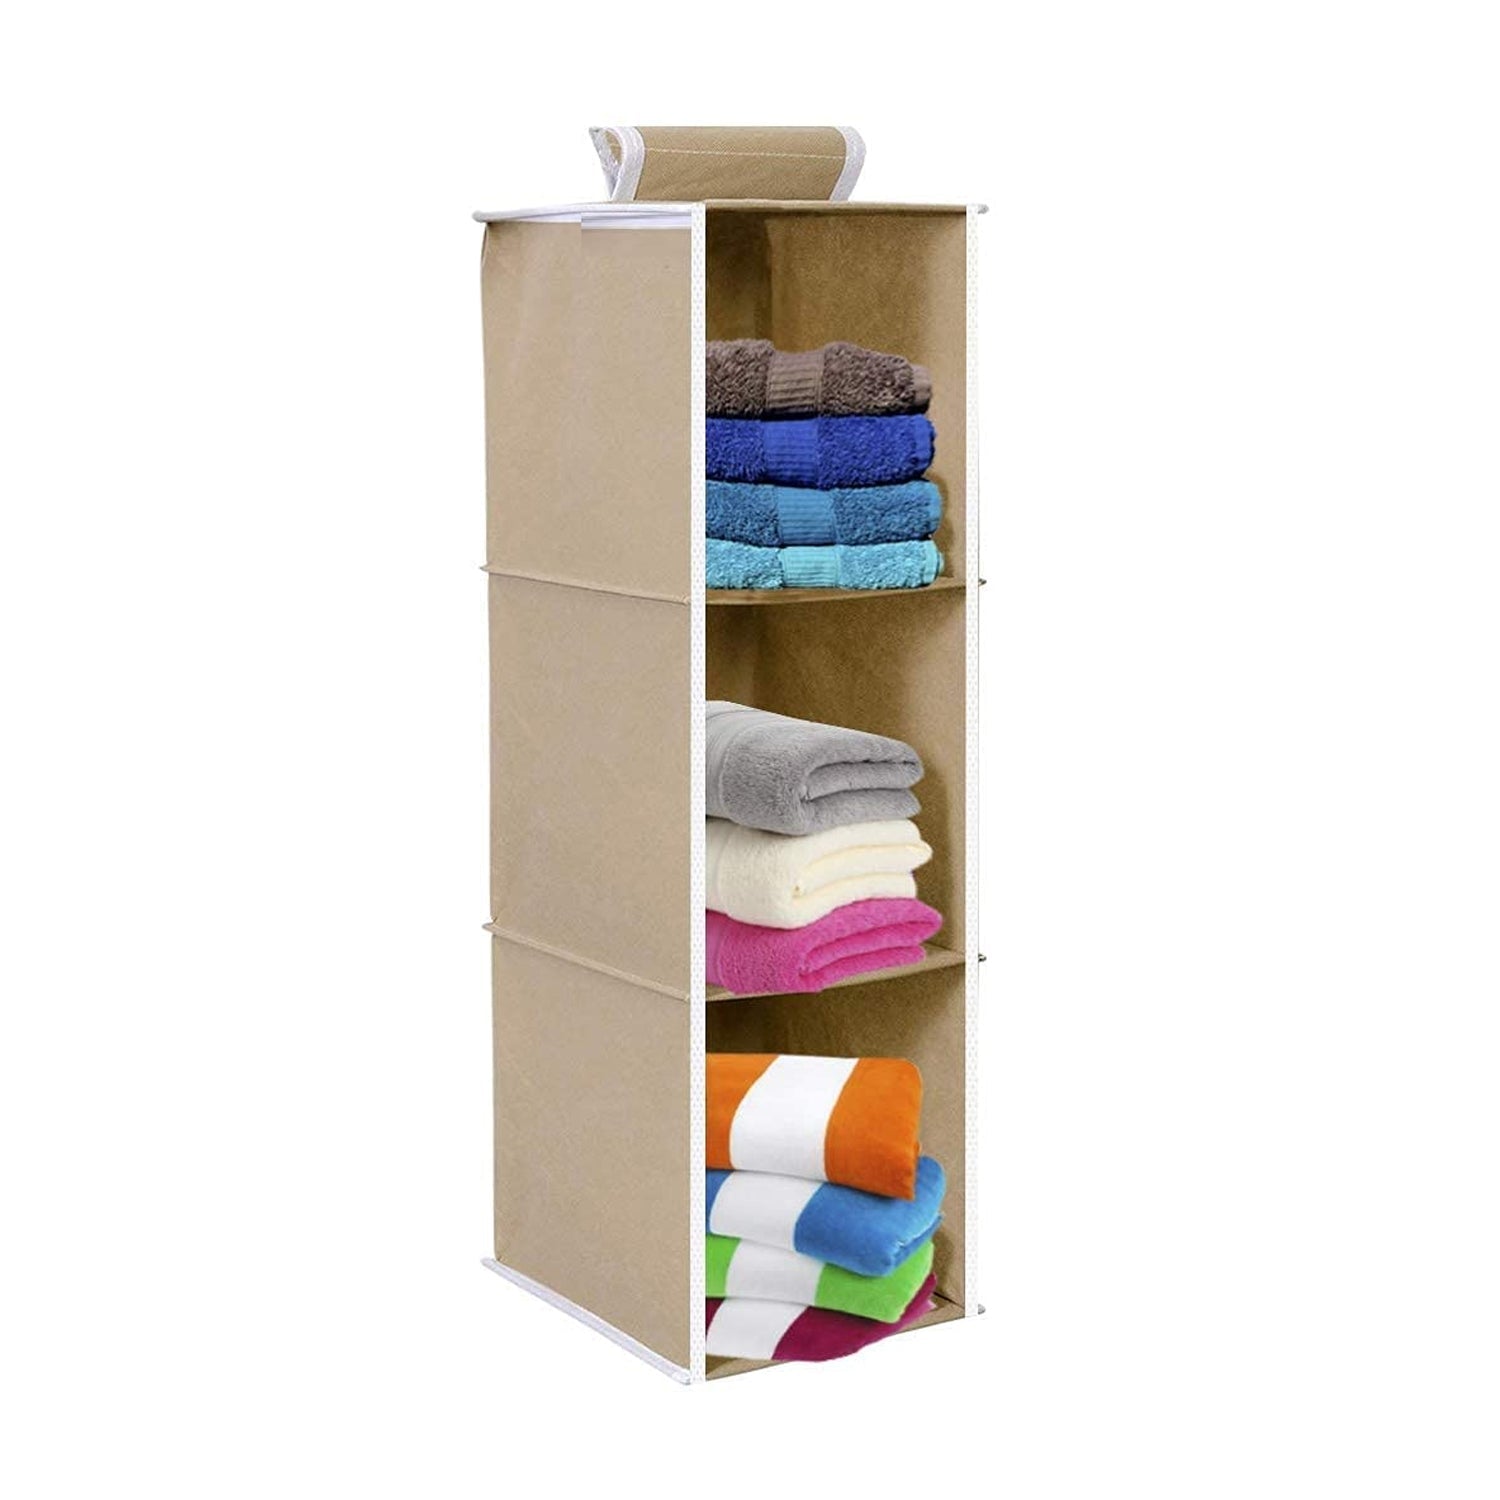 4074 Clothes Storage Organiser , Storage Organiser, Washable  Organiser, Clothing & Storage, Drawer Organiser for Home Use DeoDap